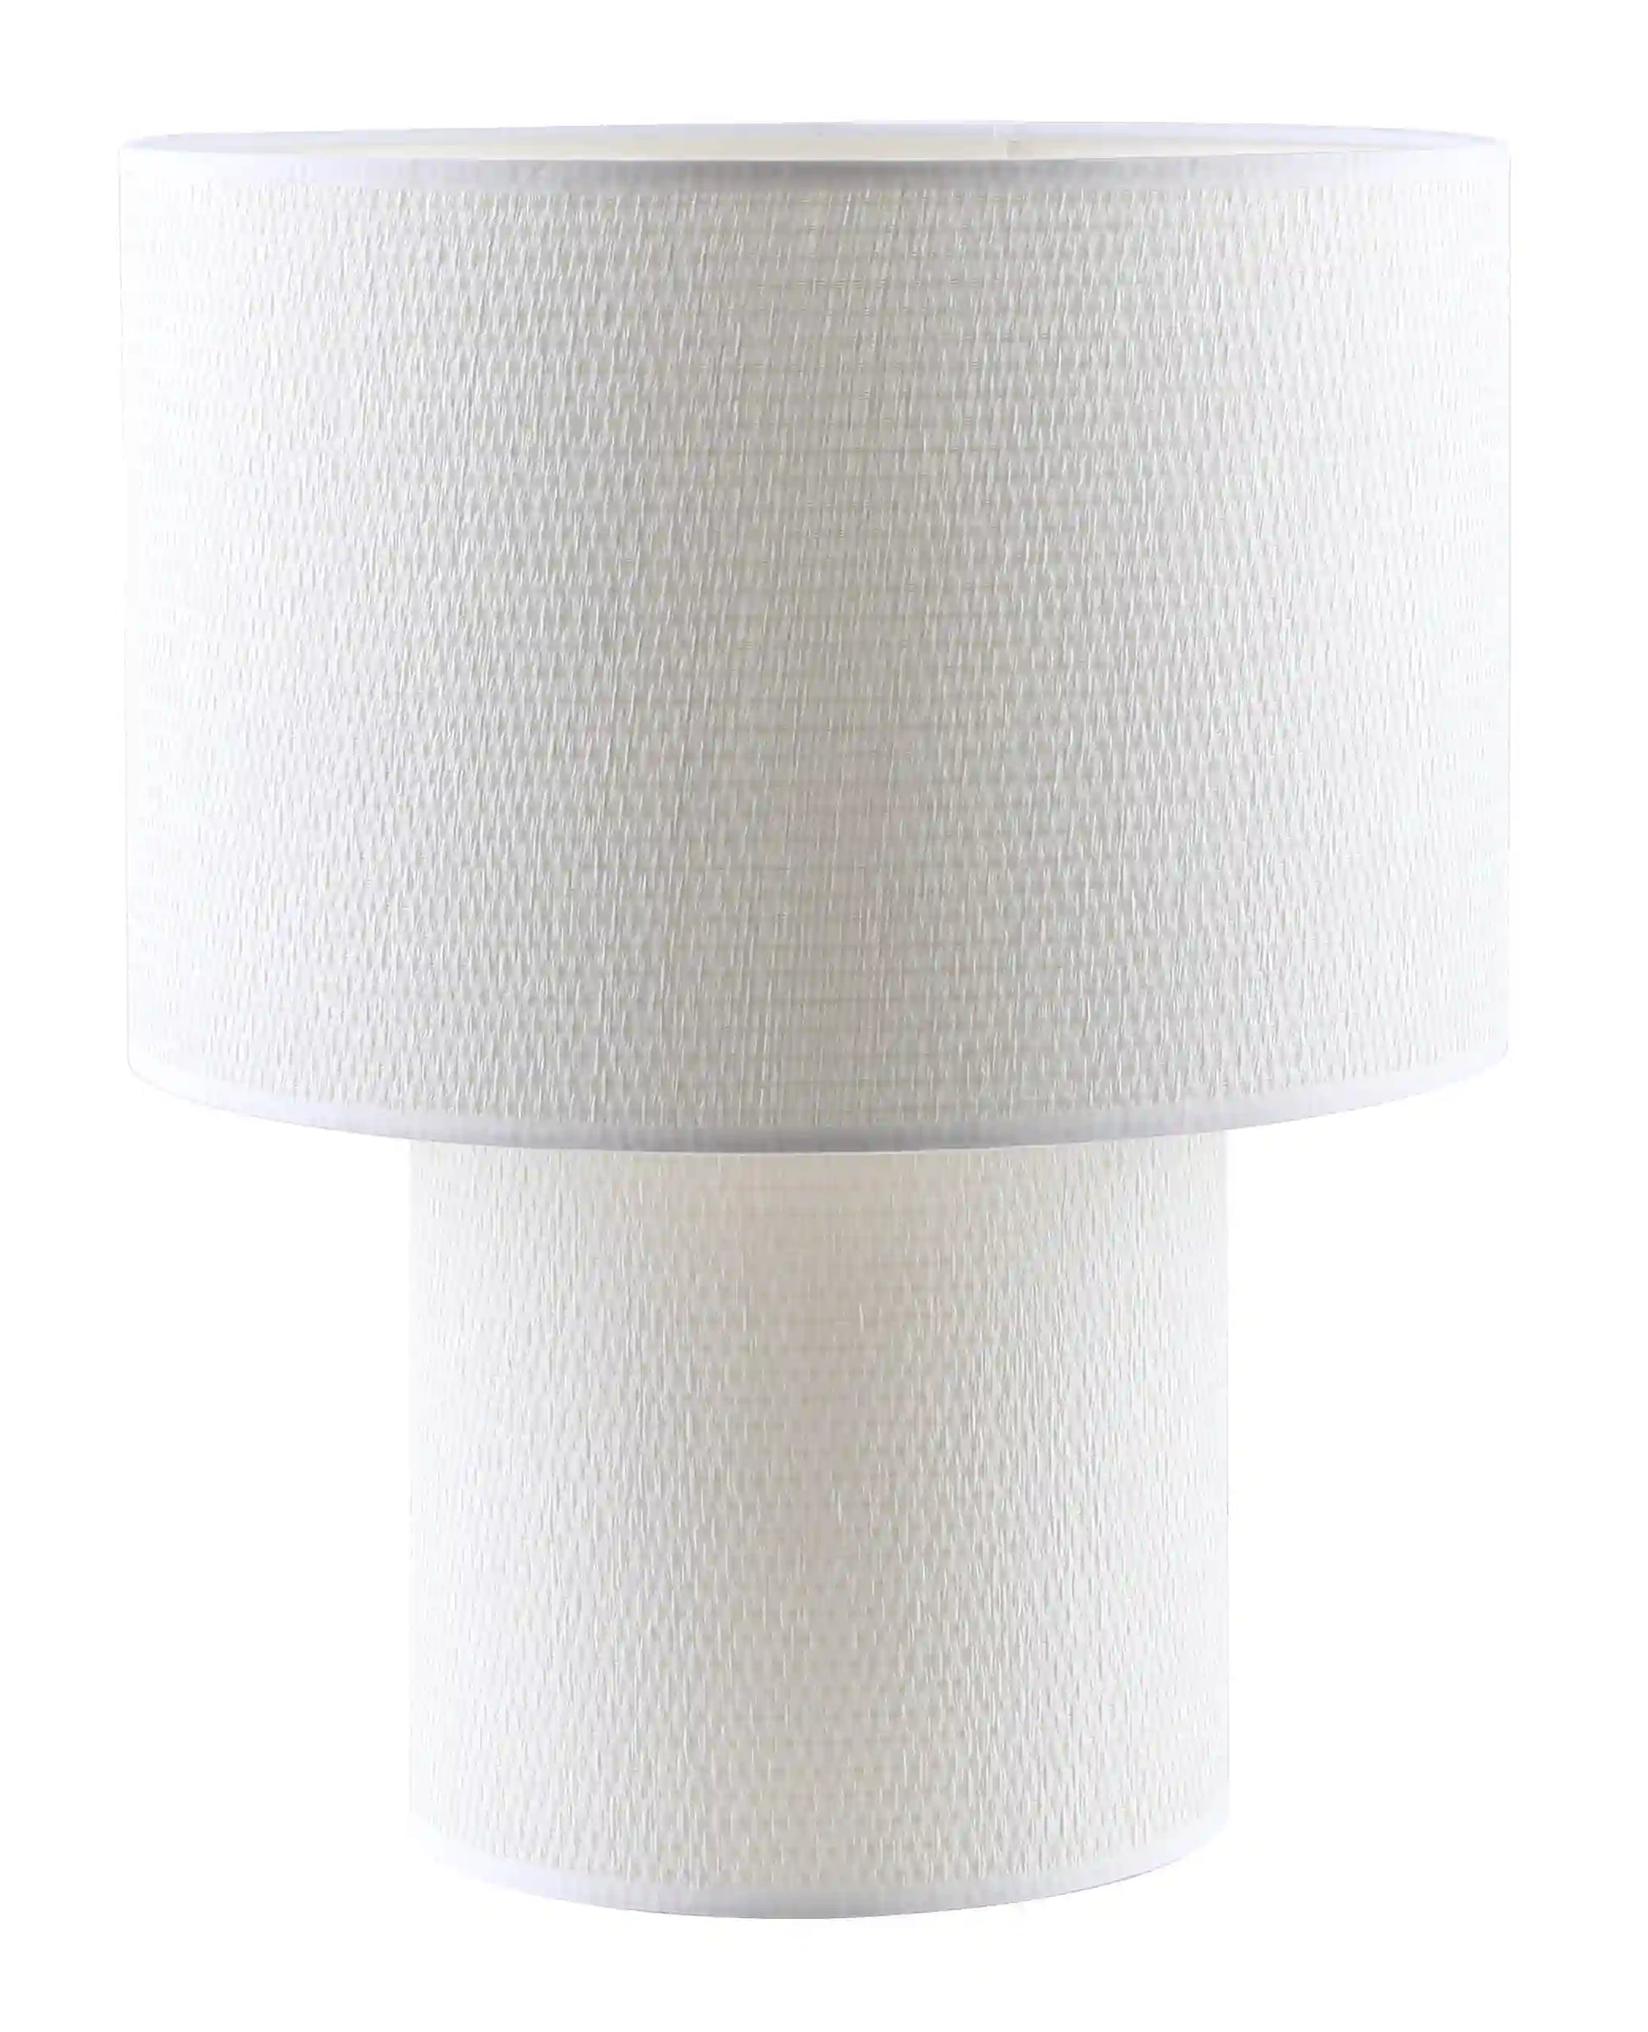 Selected image for Rea Light Amaryllis-AL HN2578AL Stona lampa, E27, 40W, Ø32cm, Bela